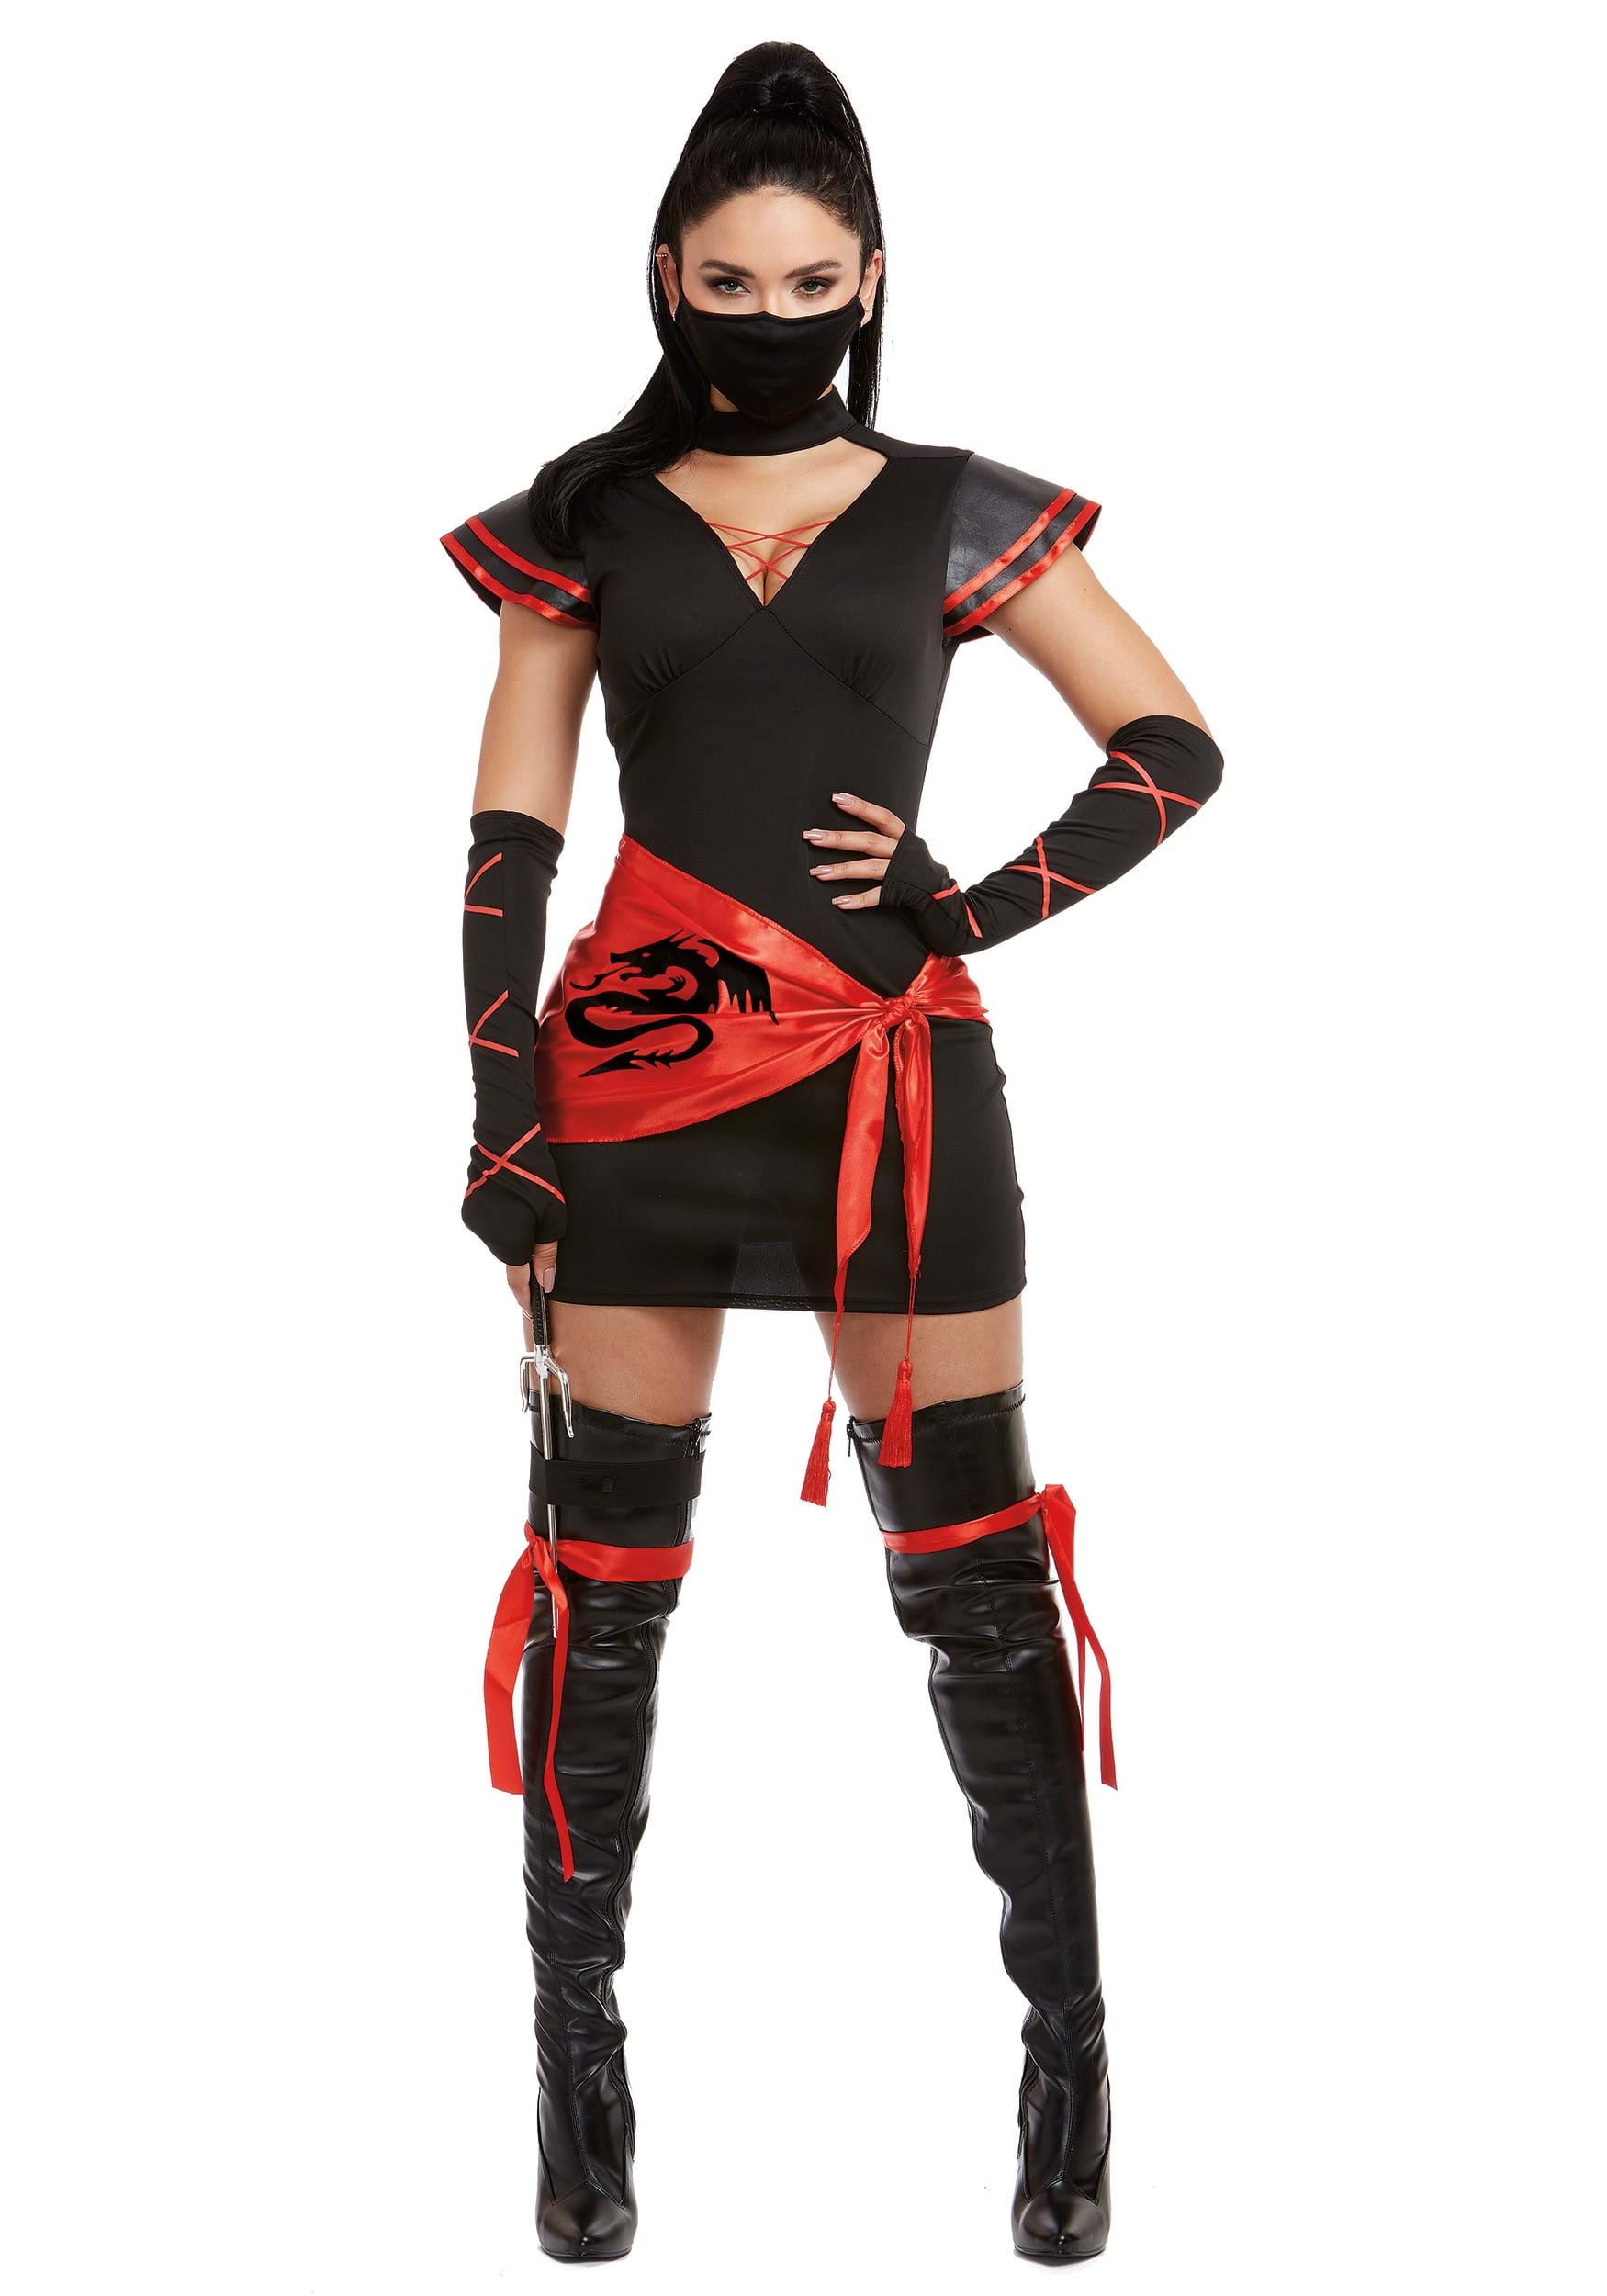 Women's Silent Ninja Costume